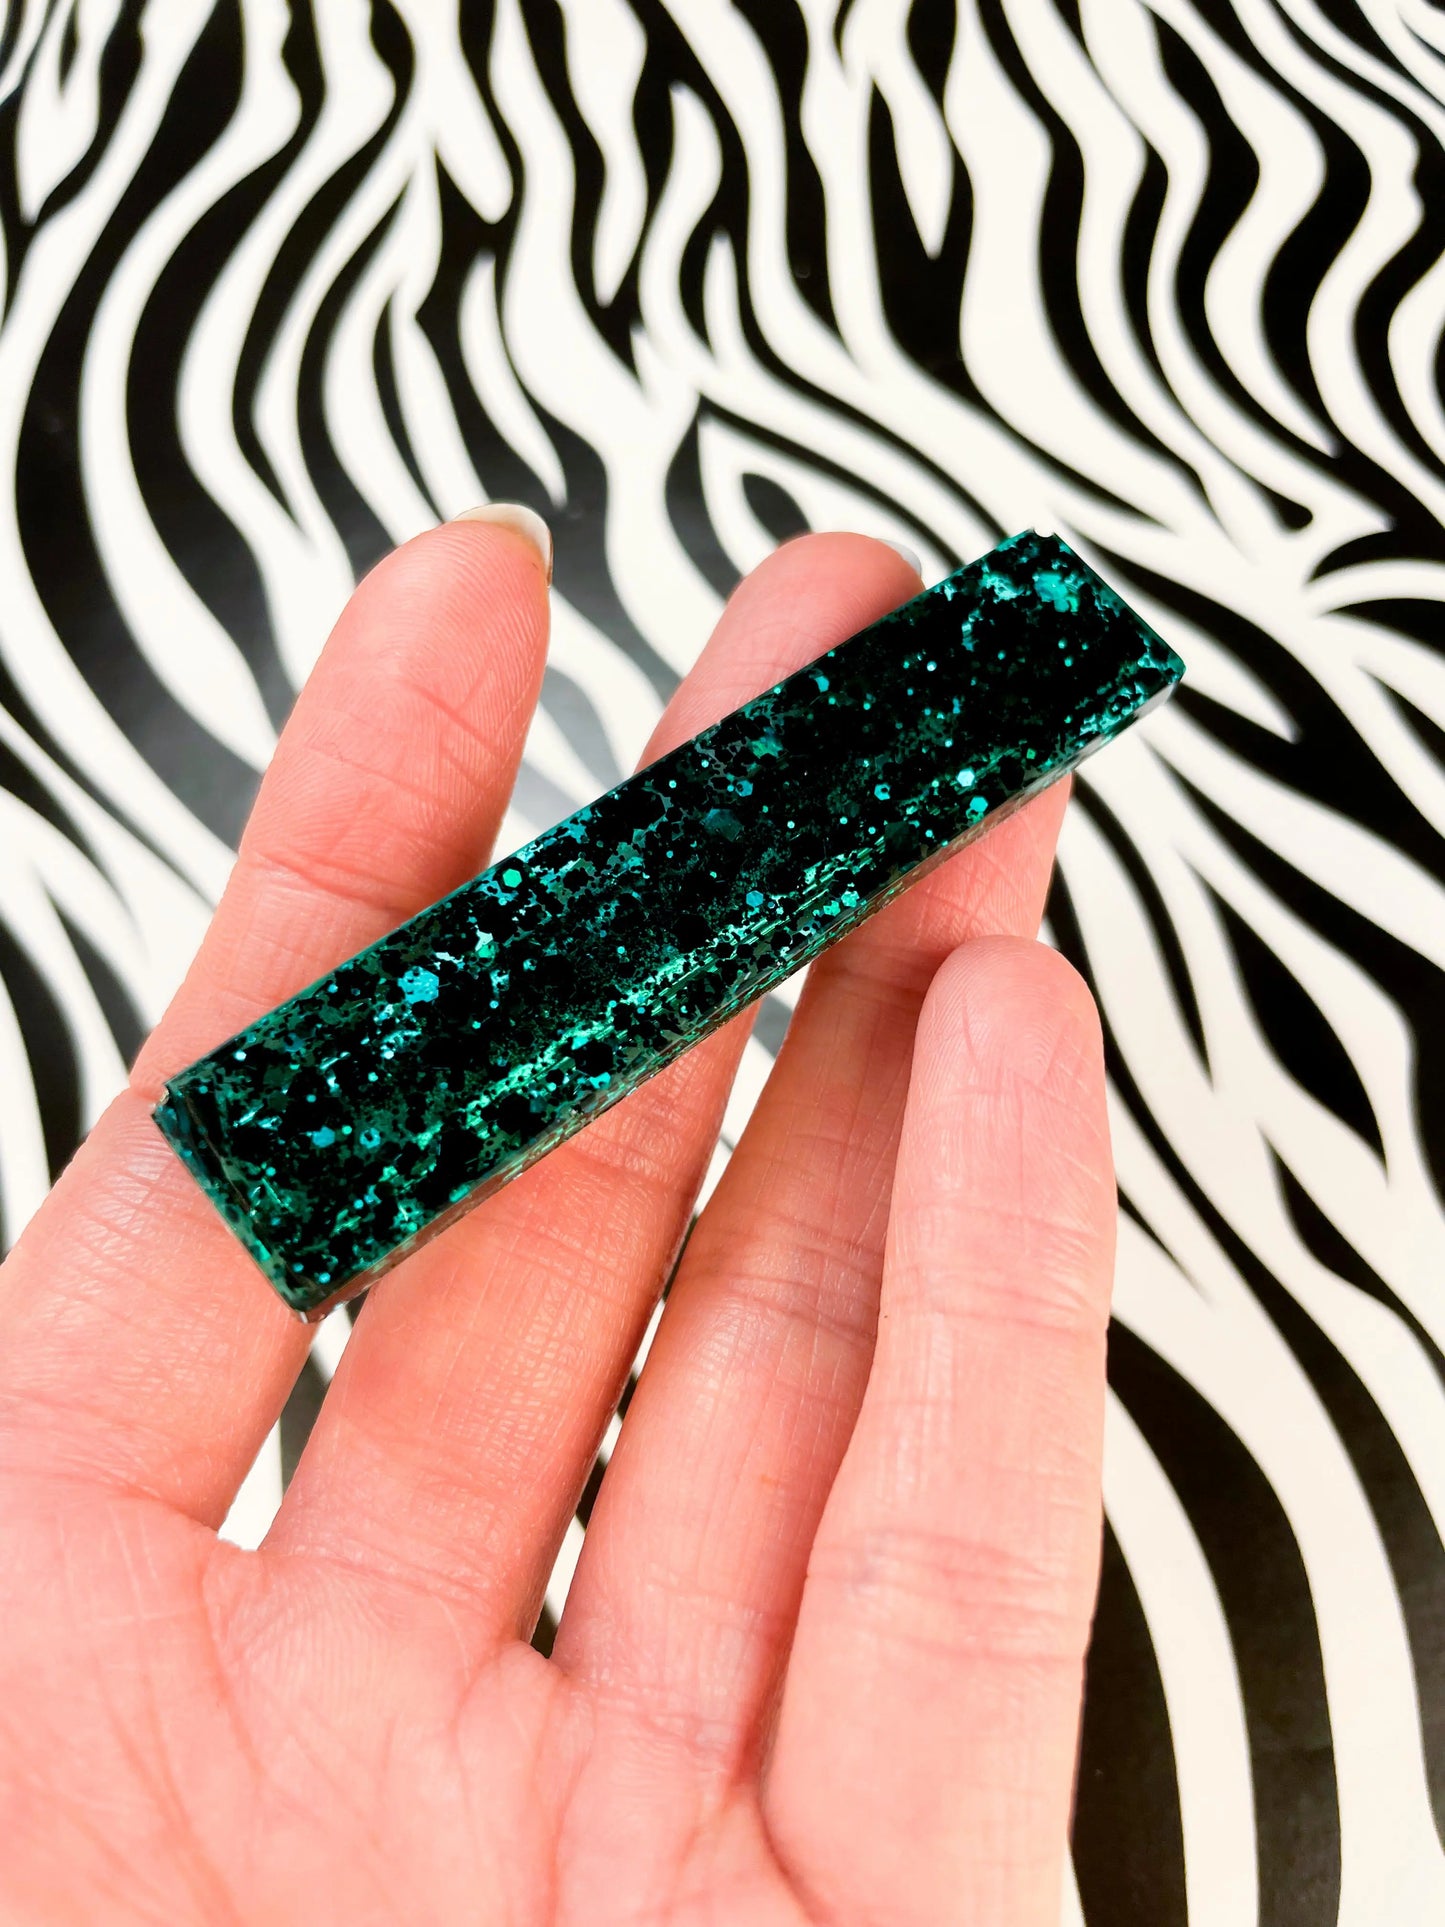 Dark Emerald Glitter Hair Clips from Sapphire Frills